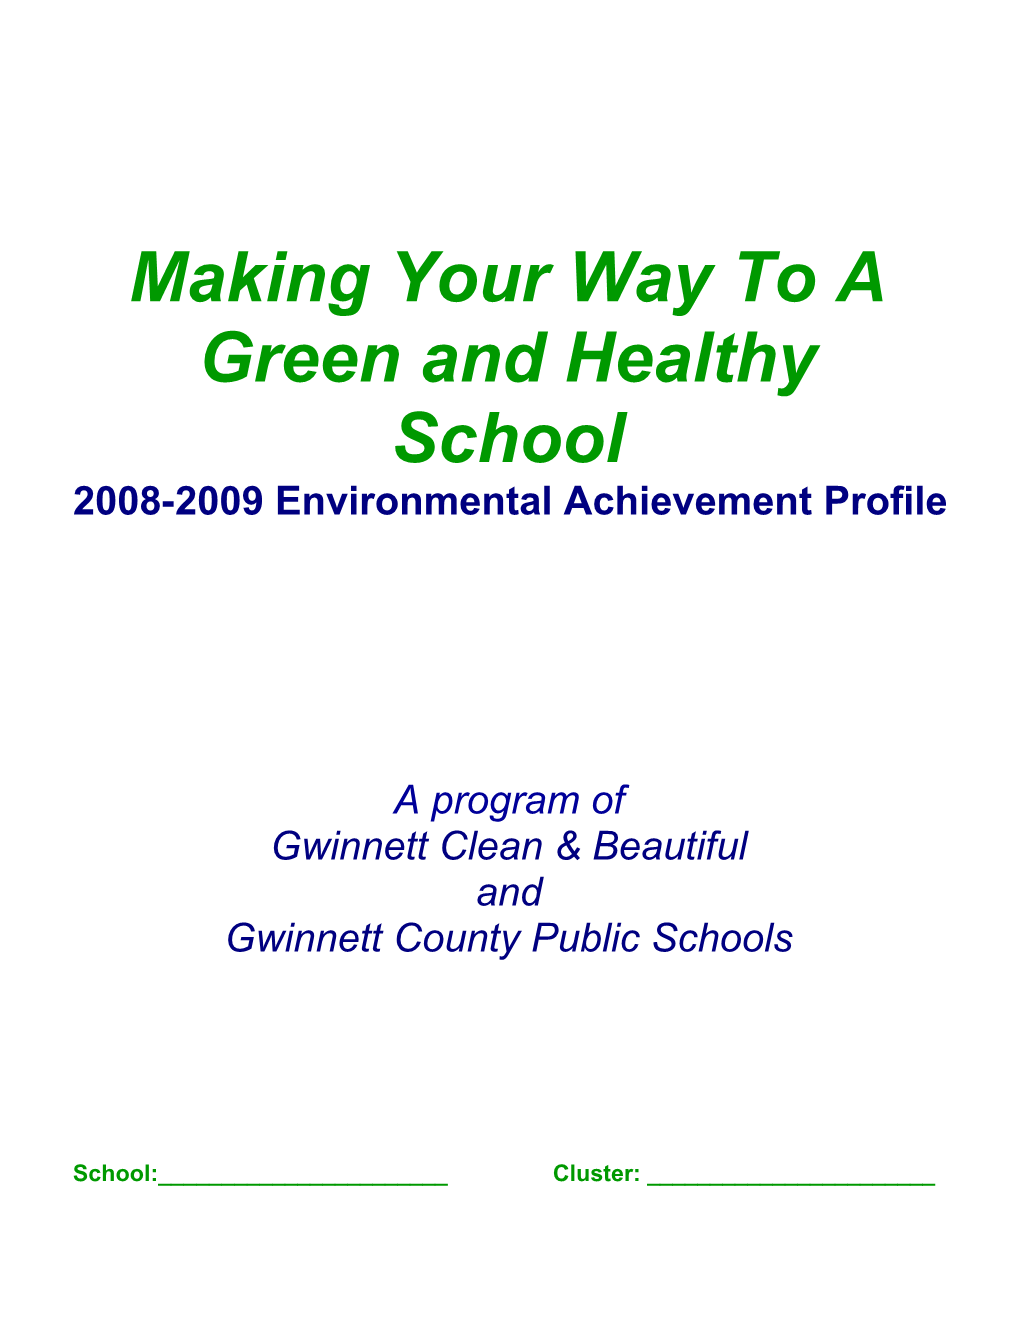 Environmental Achievement Profile for Schools